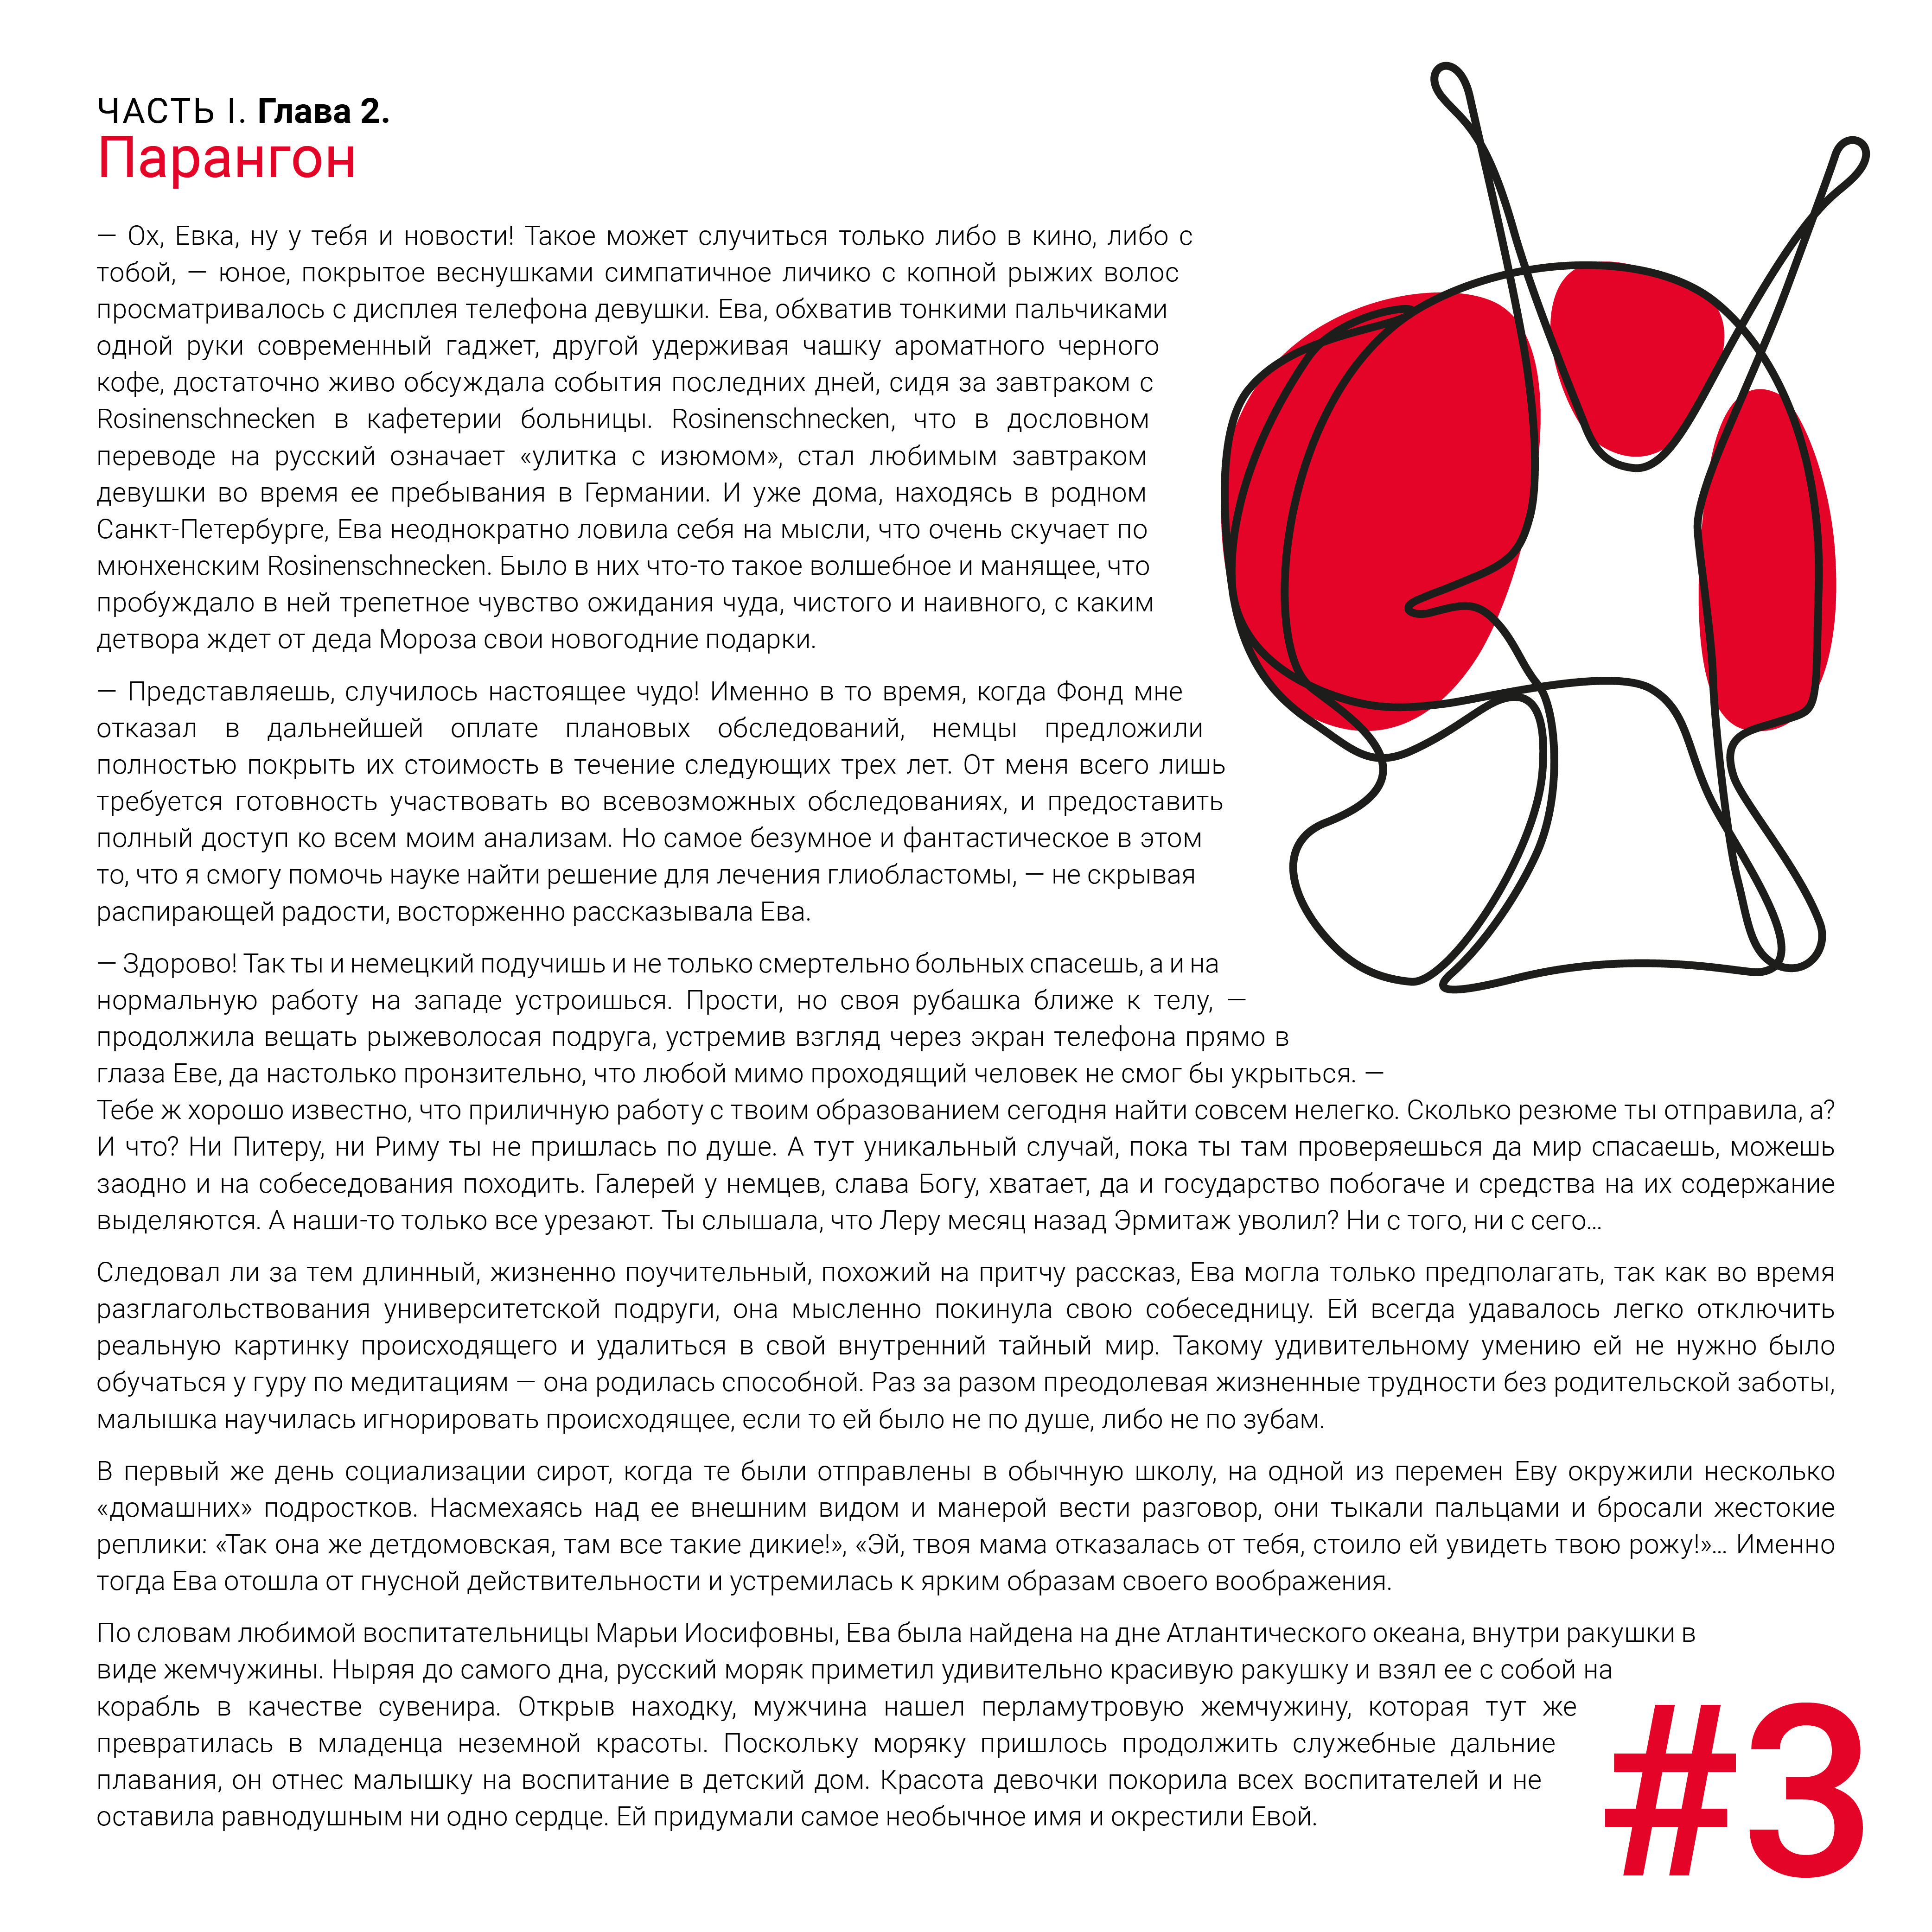 Third Page of the Book "Triple Helix – Graphics Edition" | Третья страница книги «Тройная спираль – графическая версия»